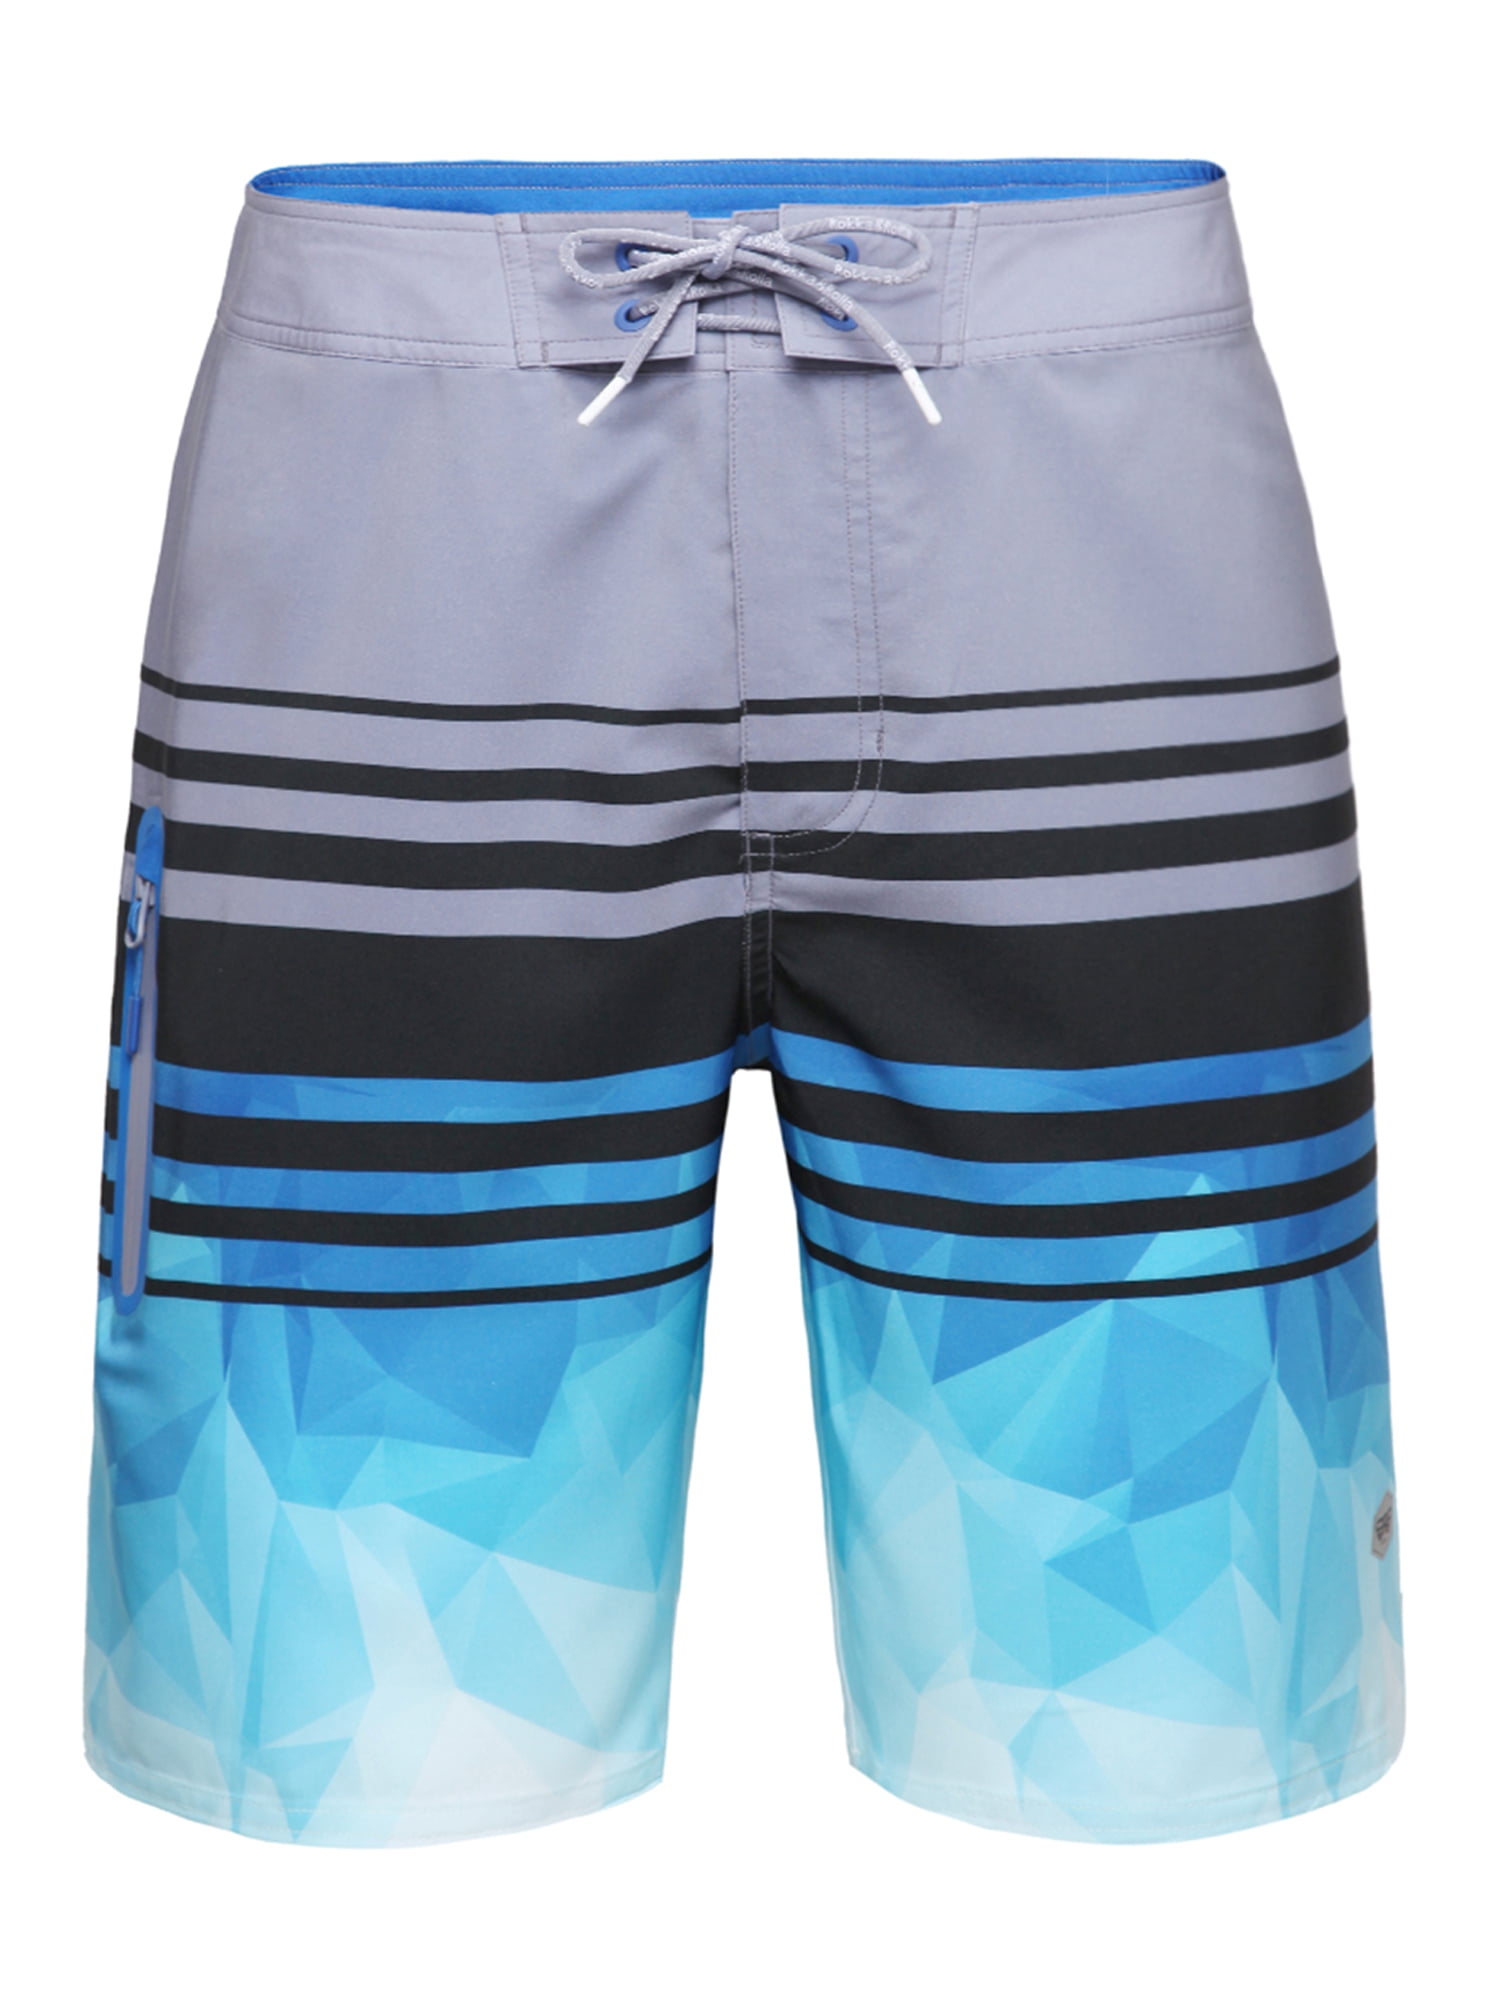 Hopgo Mens Swim Trunks 22 Quick Dry Beach Shorts Striped Boardshorts with Mesh Lining 